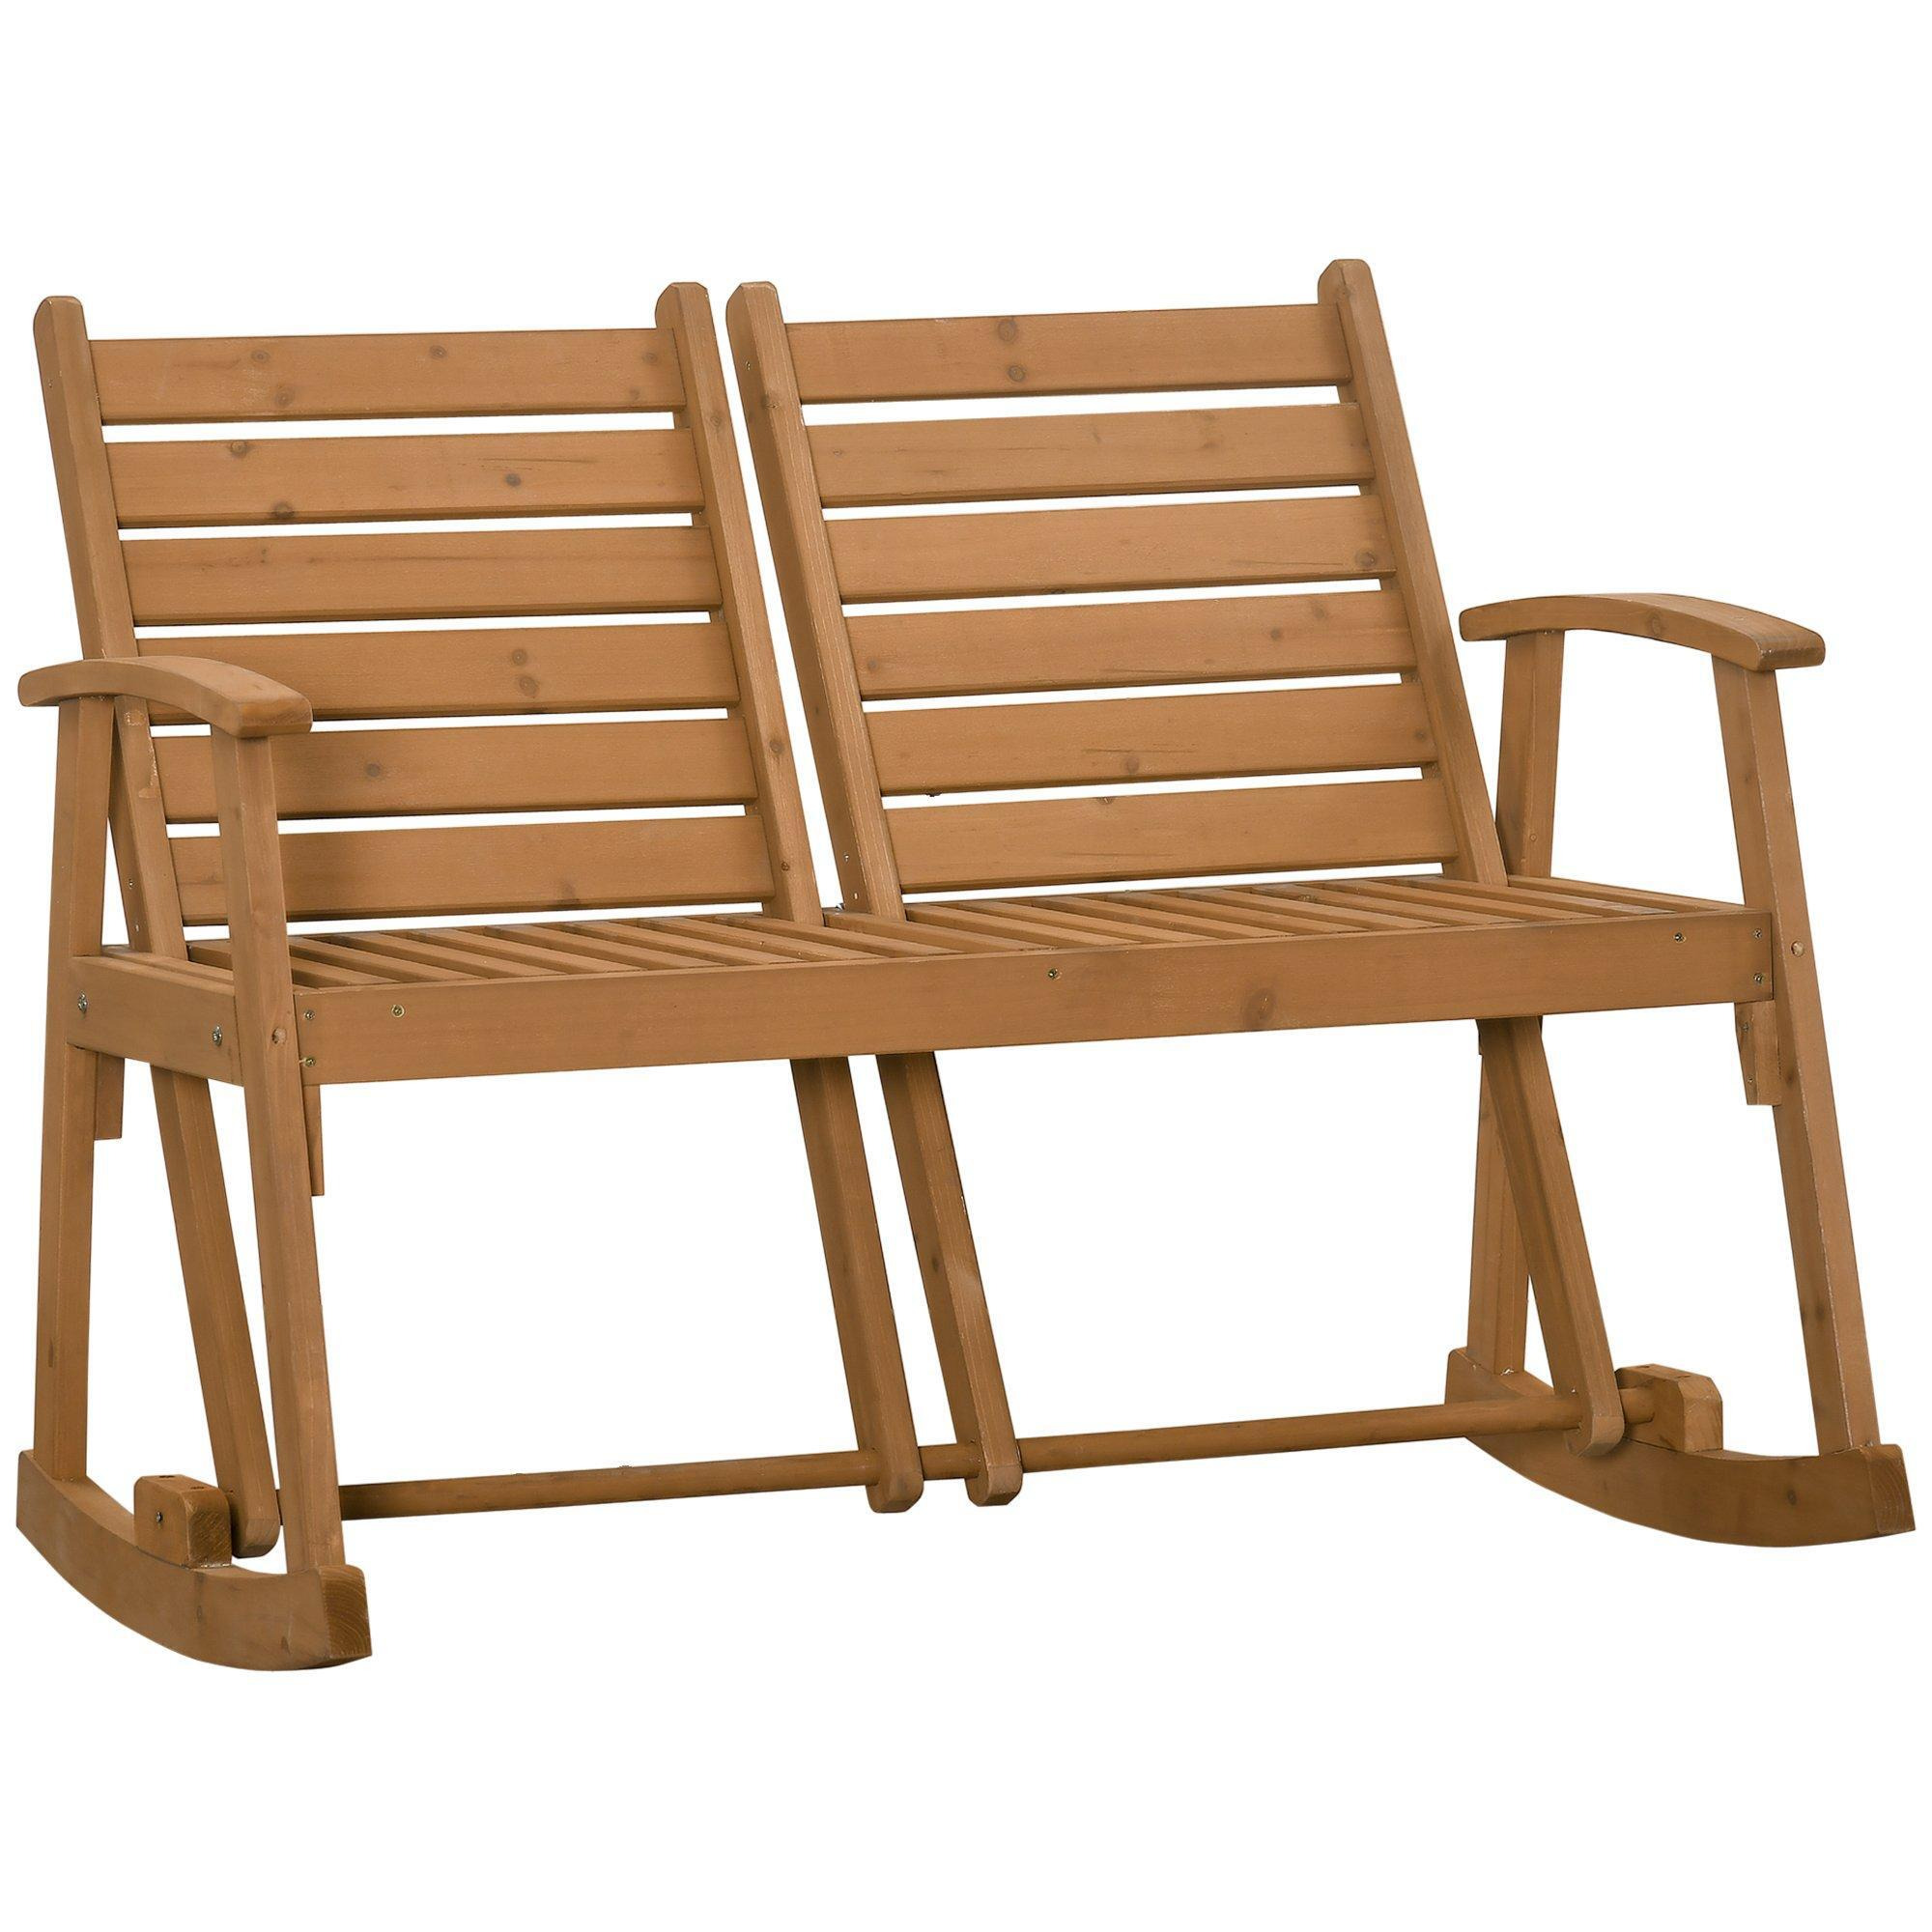 Wooden Garden Rocking Bench with Separately Adjustable Backrests - image 1